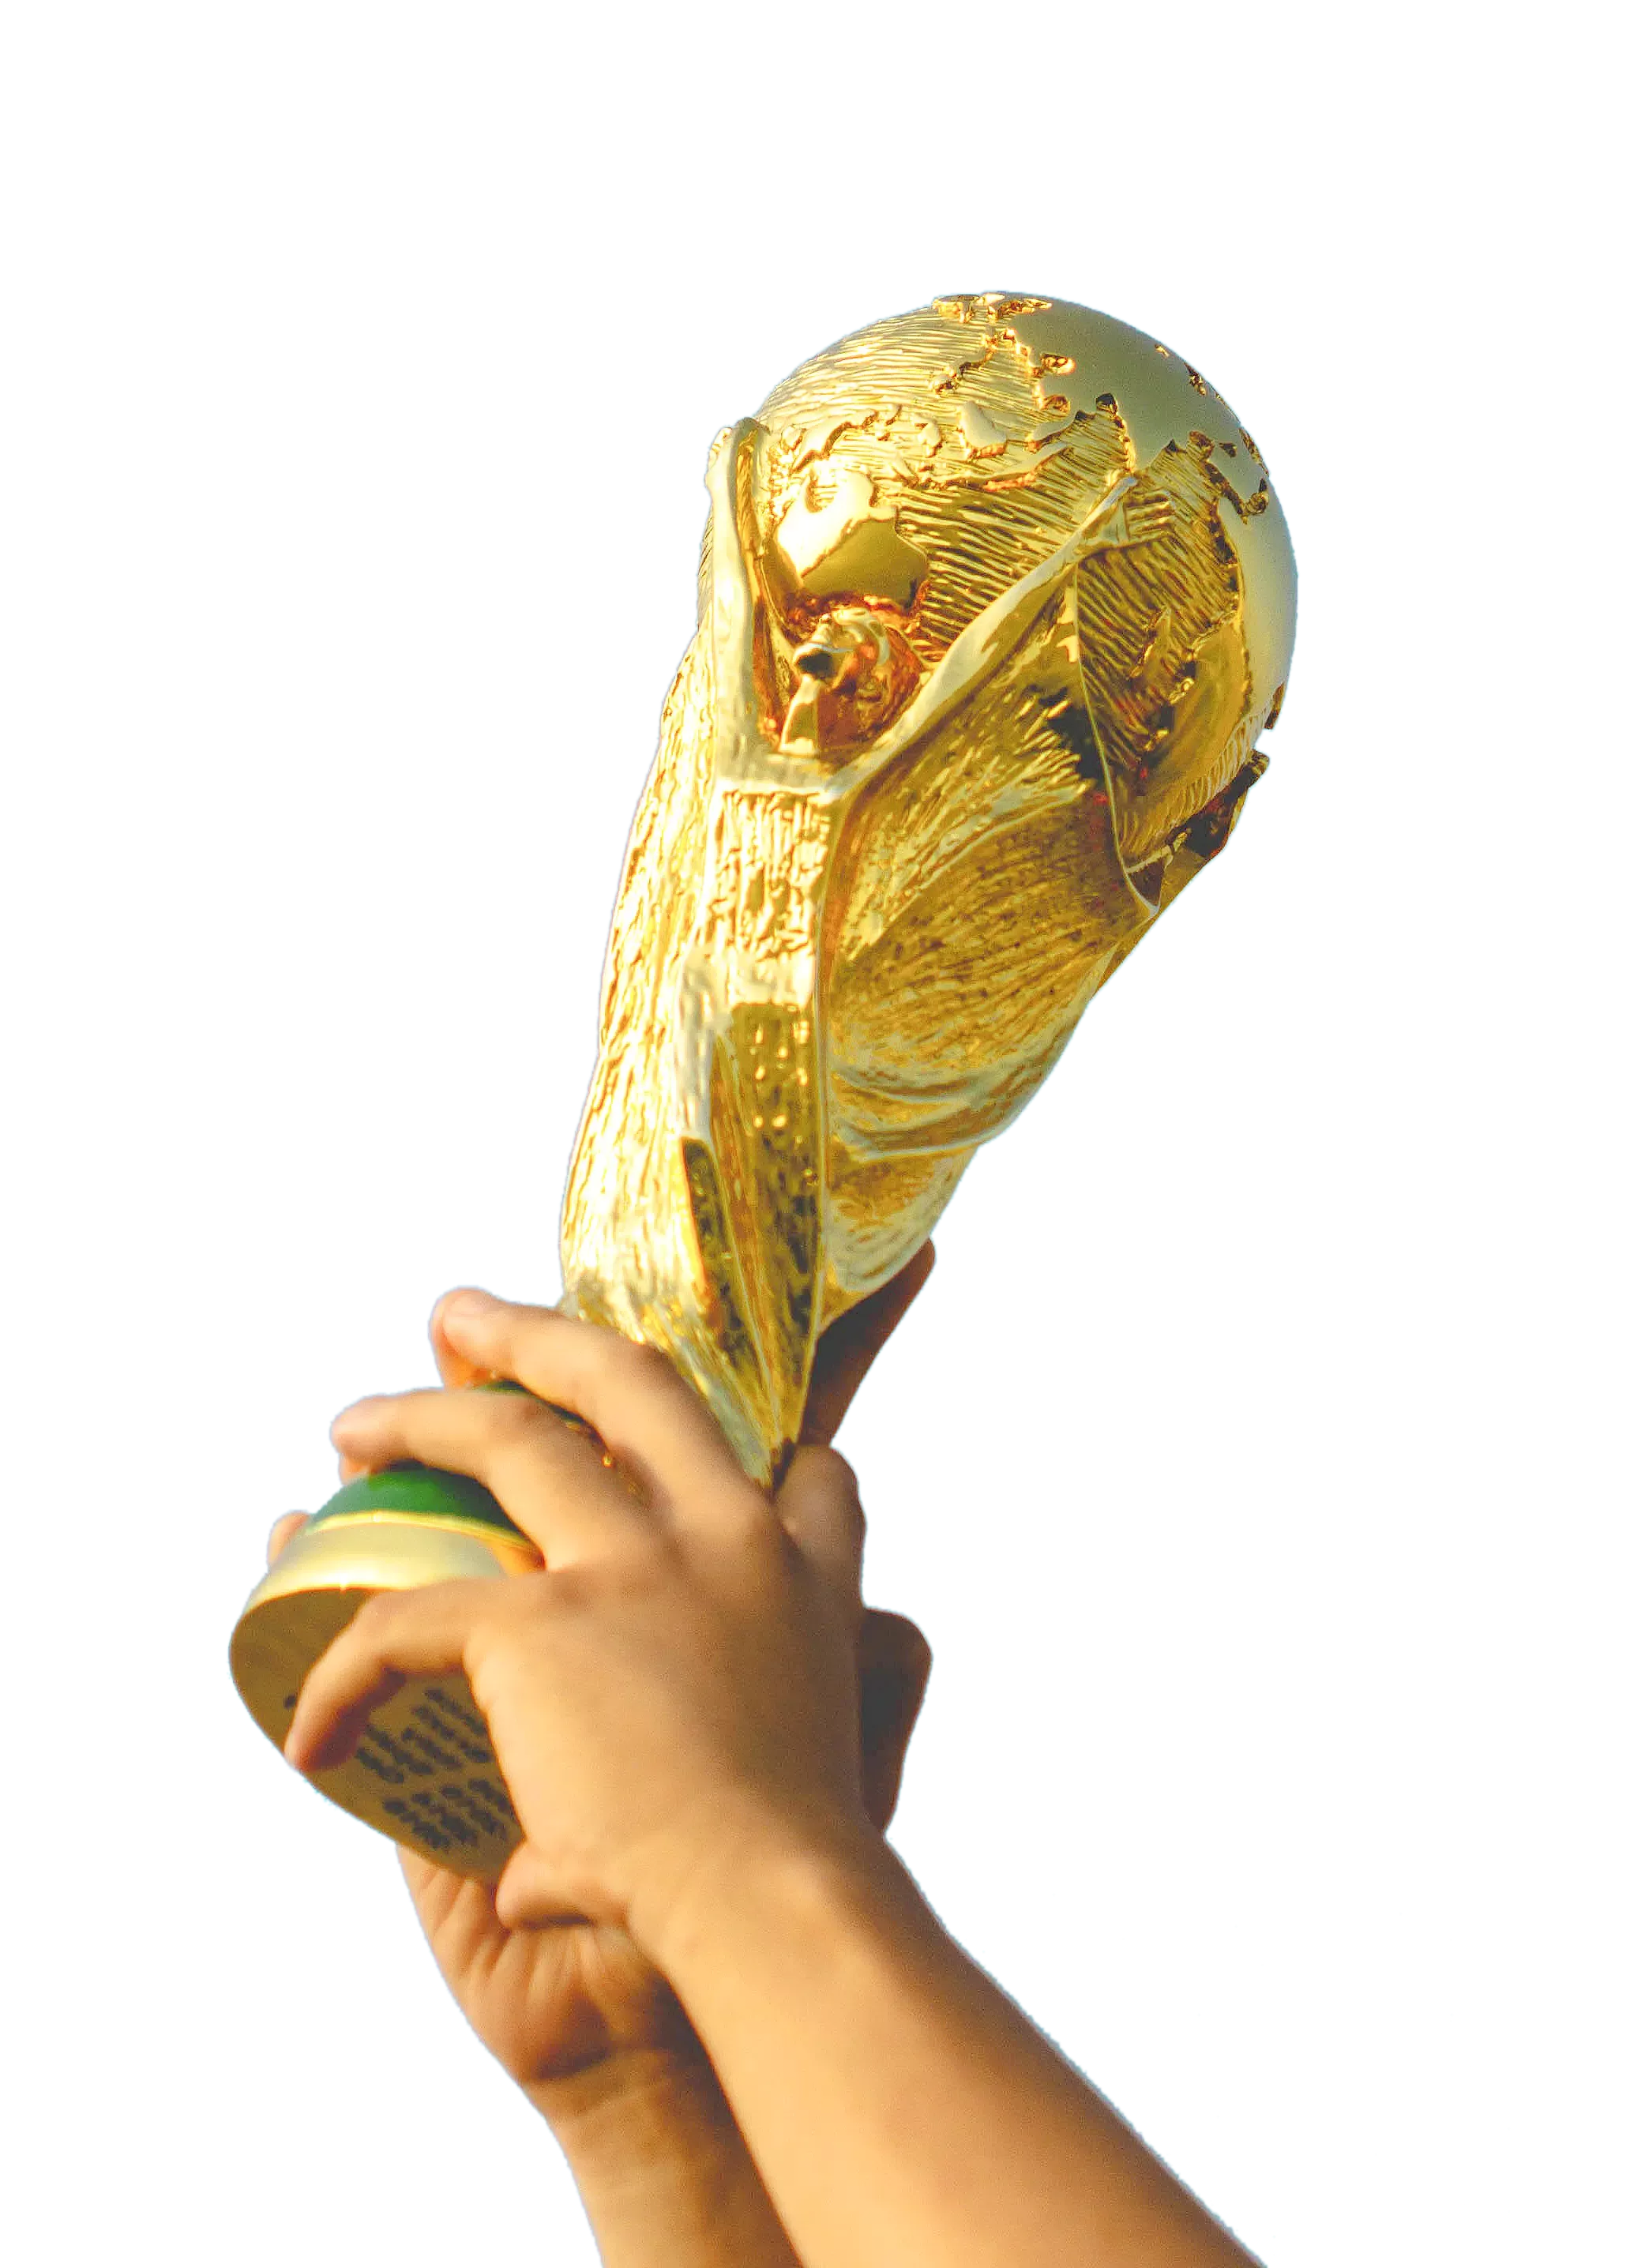 FIFA World Cup survey trophy 2022